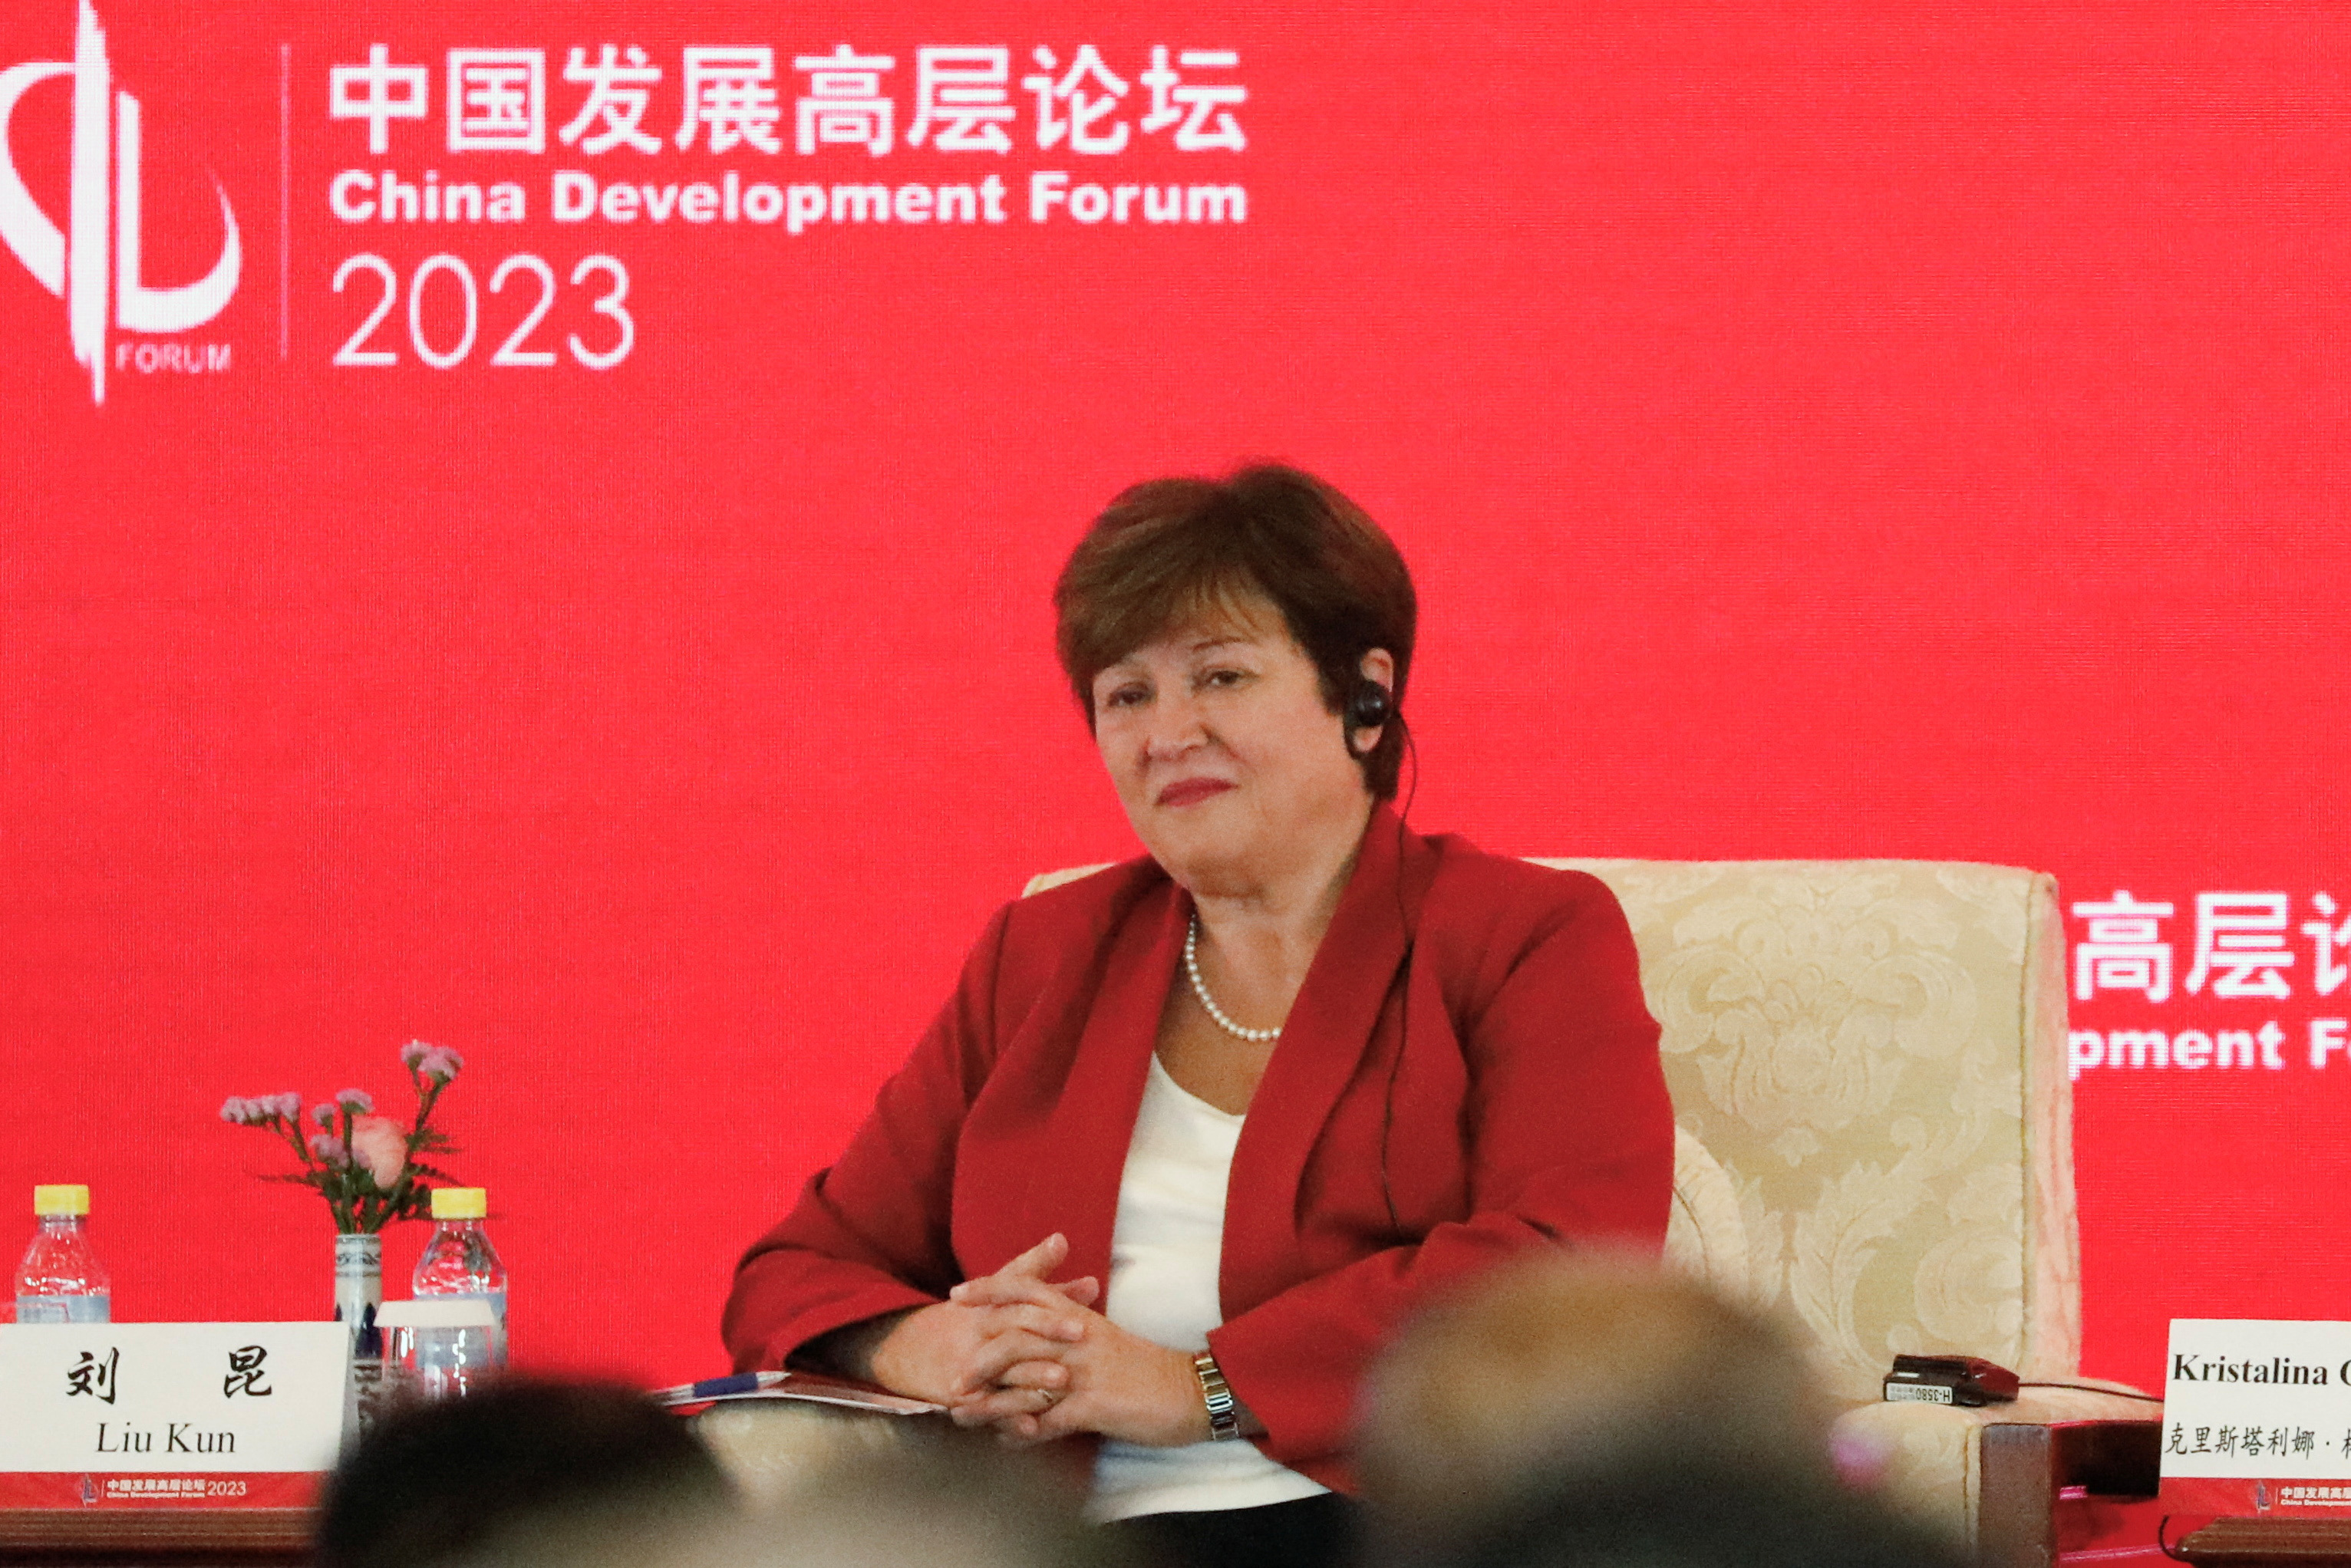 International Monetary Fund (IMF) Managing Director Kristalina Georgieva attends the China Development Forum 2023, in Beijing, China, March 26, 2023. REUTERS/Jing Xu